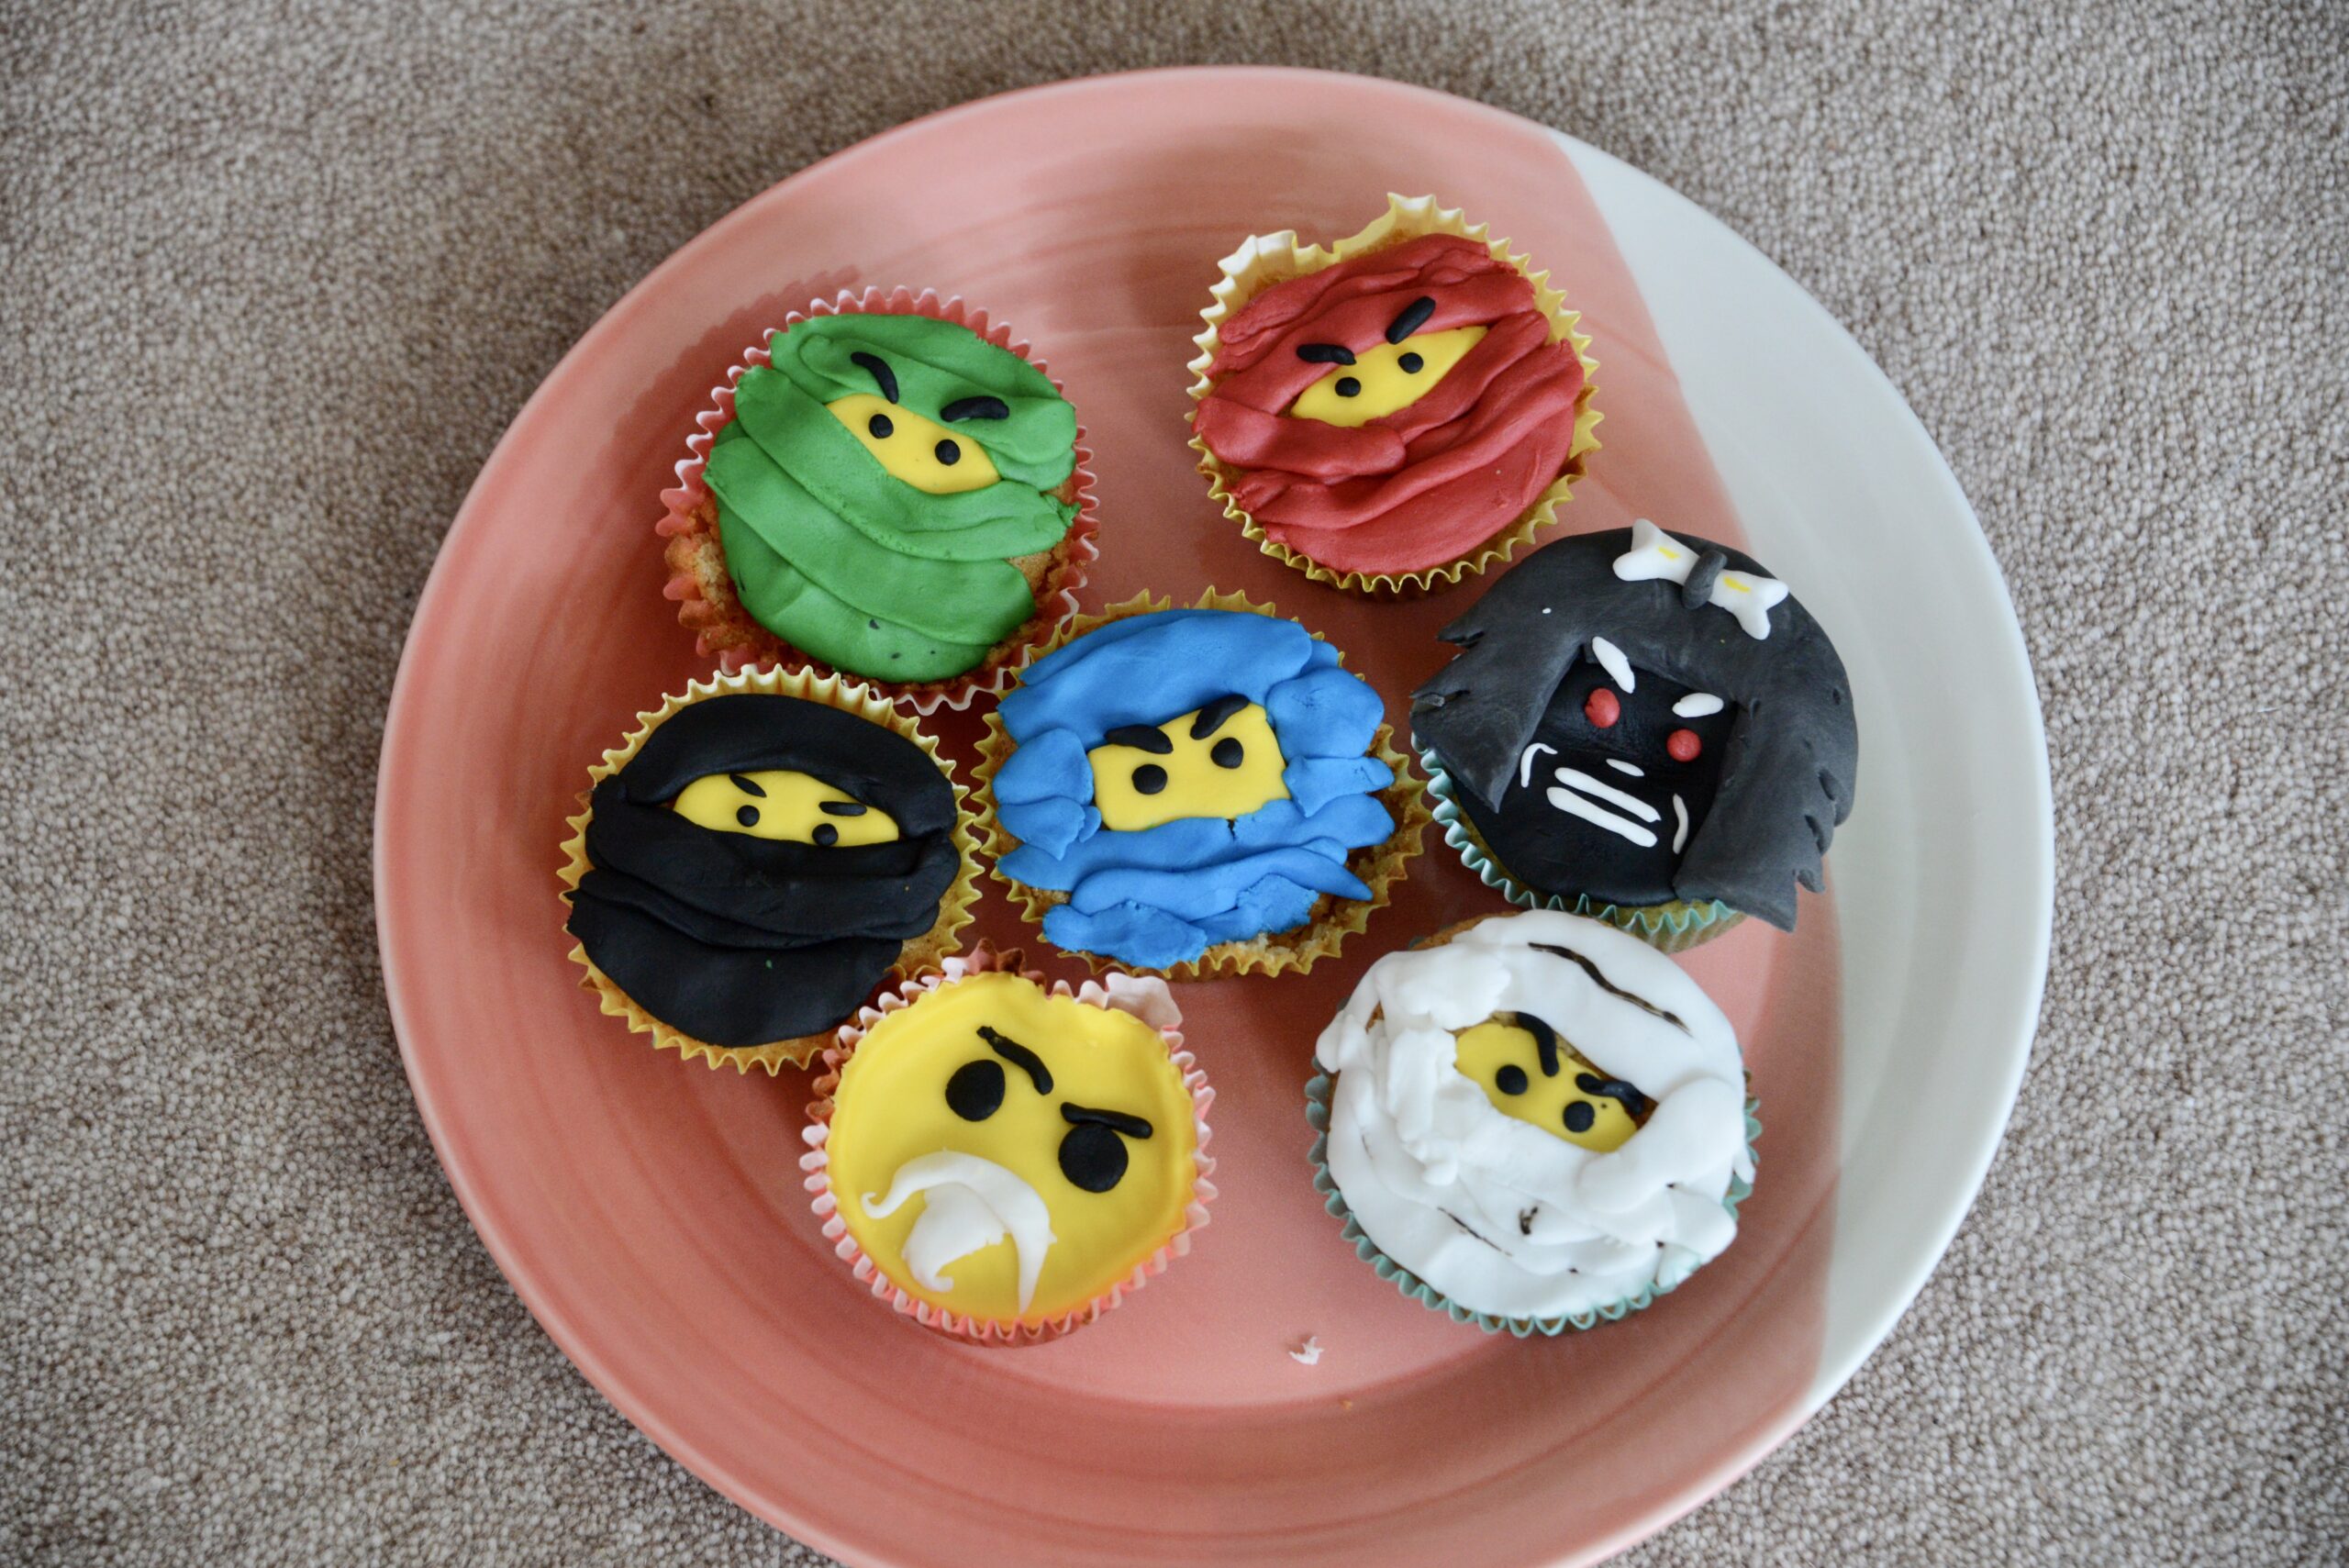 Ninjago cupcakes including Kai, Zane, Cole, Lord Garmaddon and Master Wu